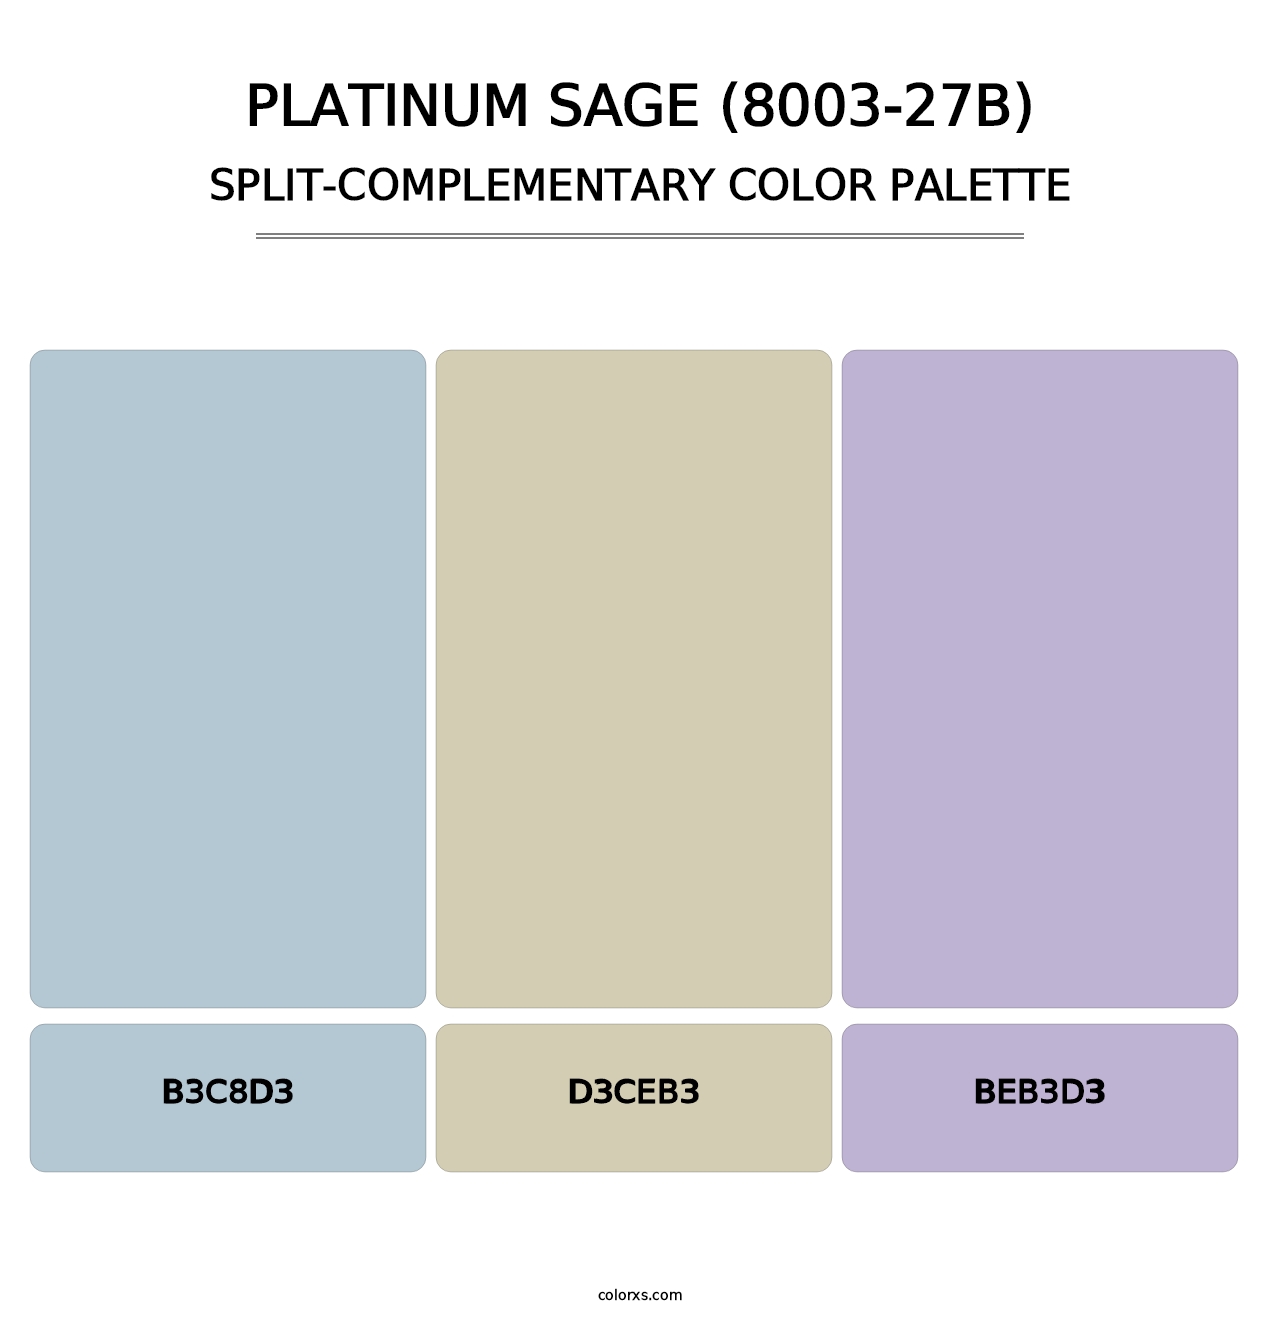 Platinum Sage (8003-27B) - Split-Complementary Color Palette